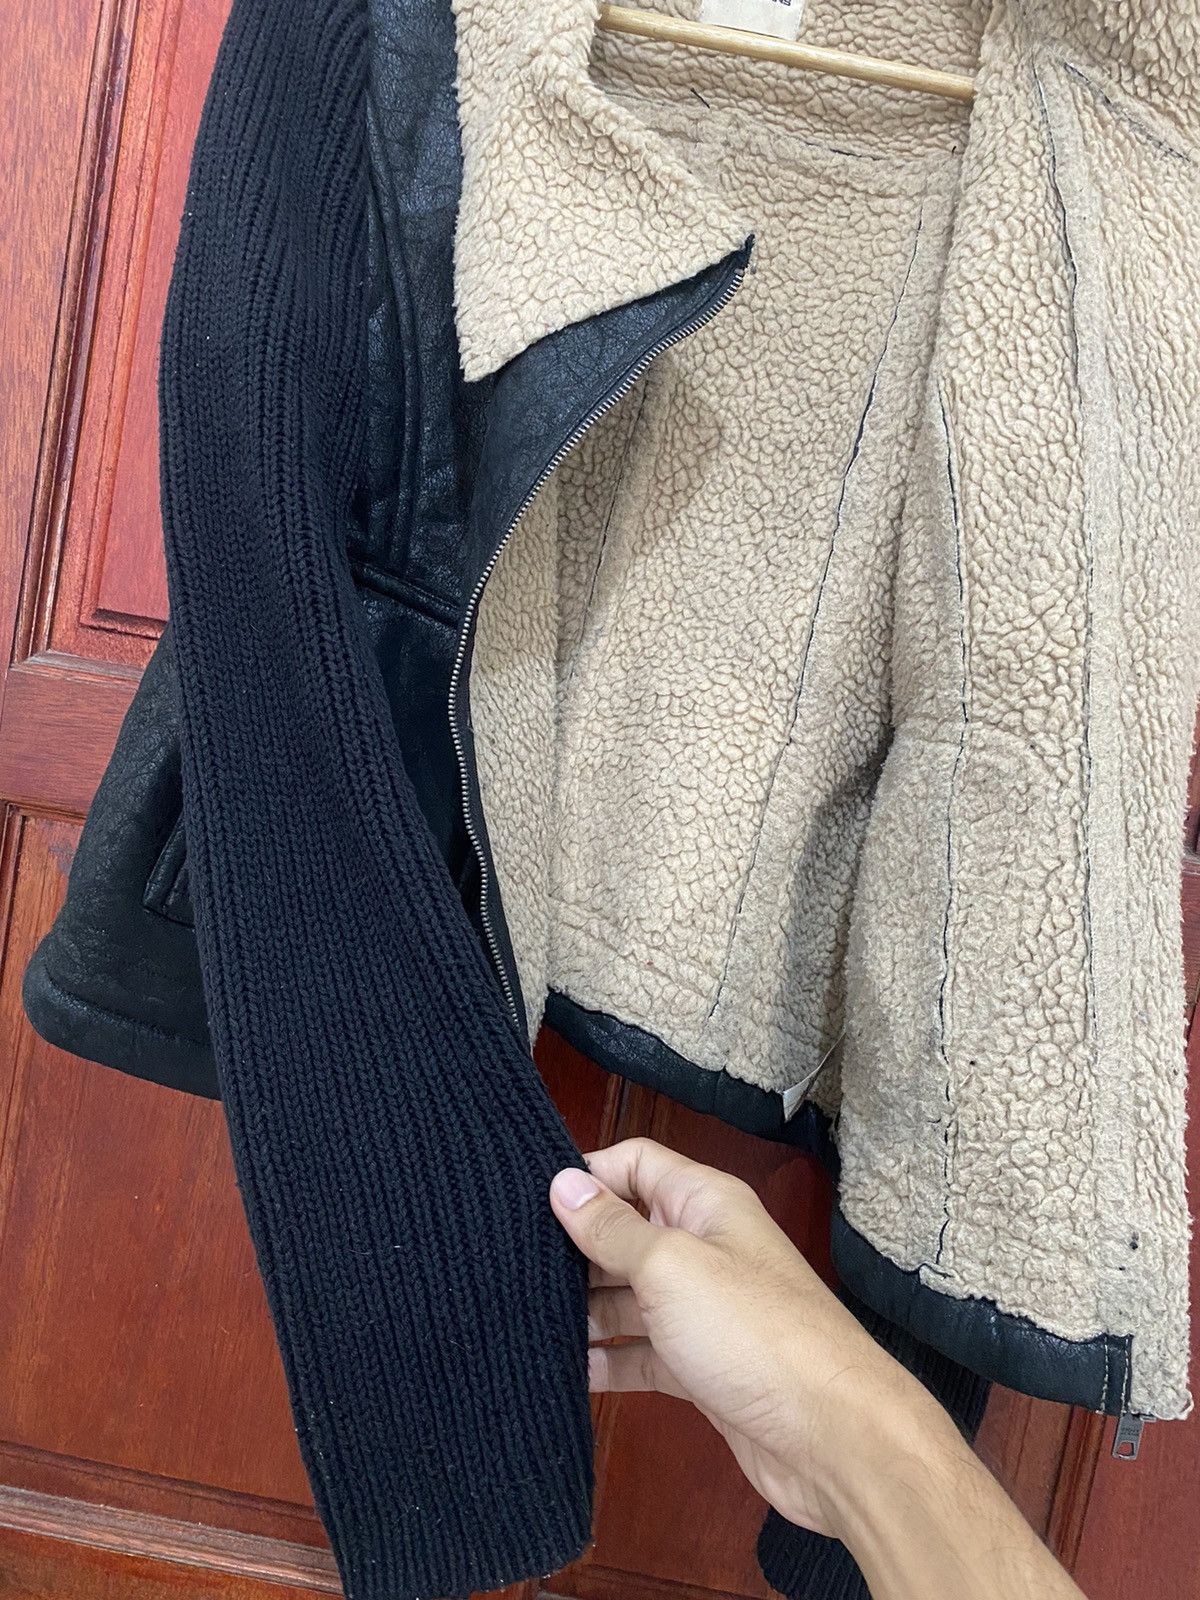 If Six Was Nine - DKNY Faux Shearling Jacket Sleeve Knit Women Cropped Design - 7